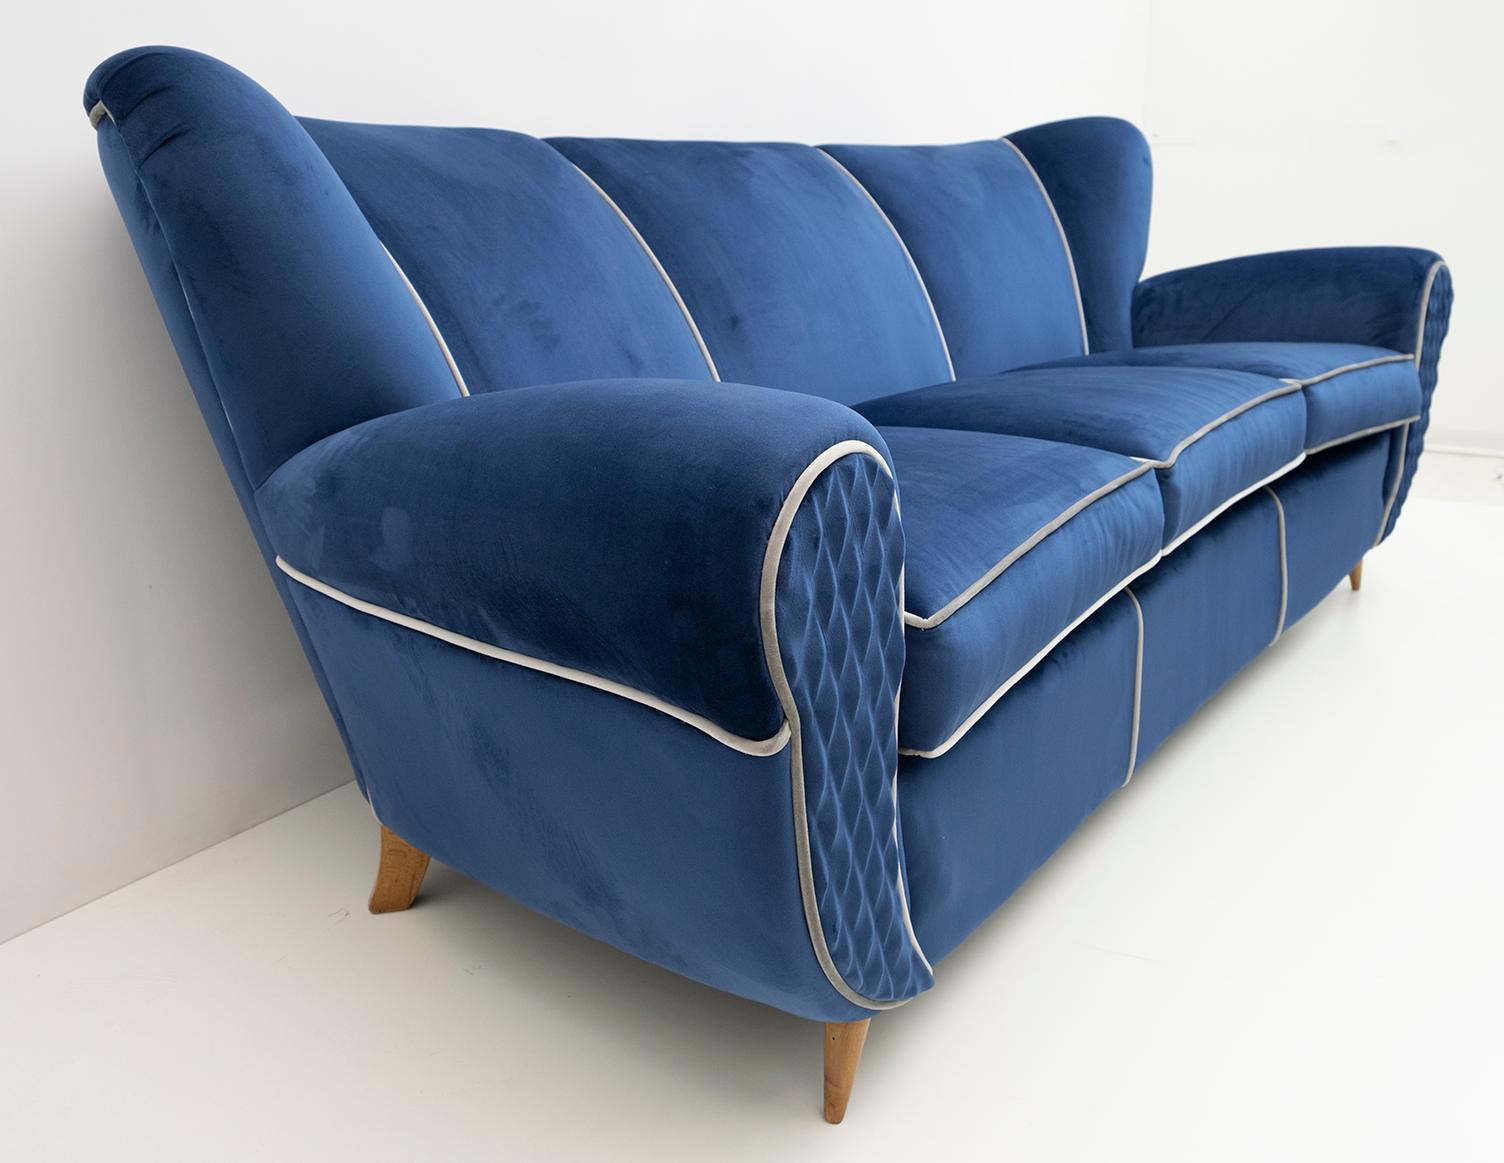 Guglielmo Ulrich Art Deco Italian Velvet Sofa, 1940s For Sale 1